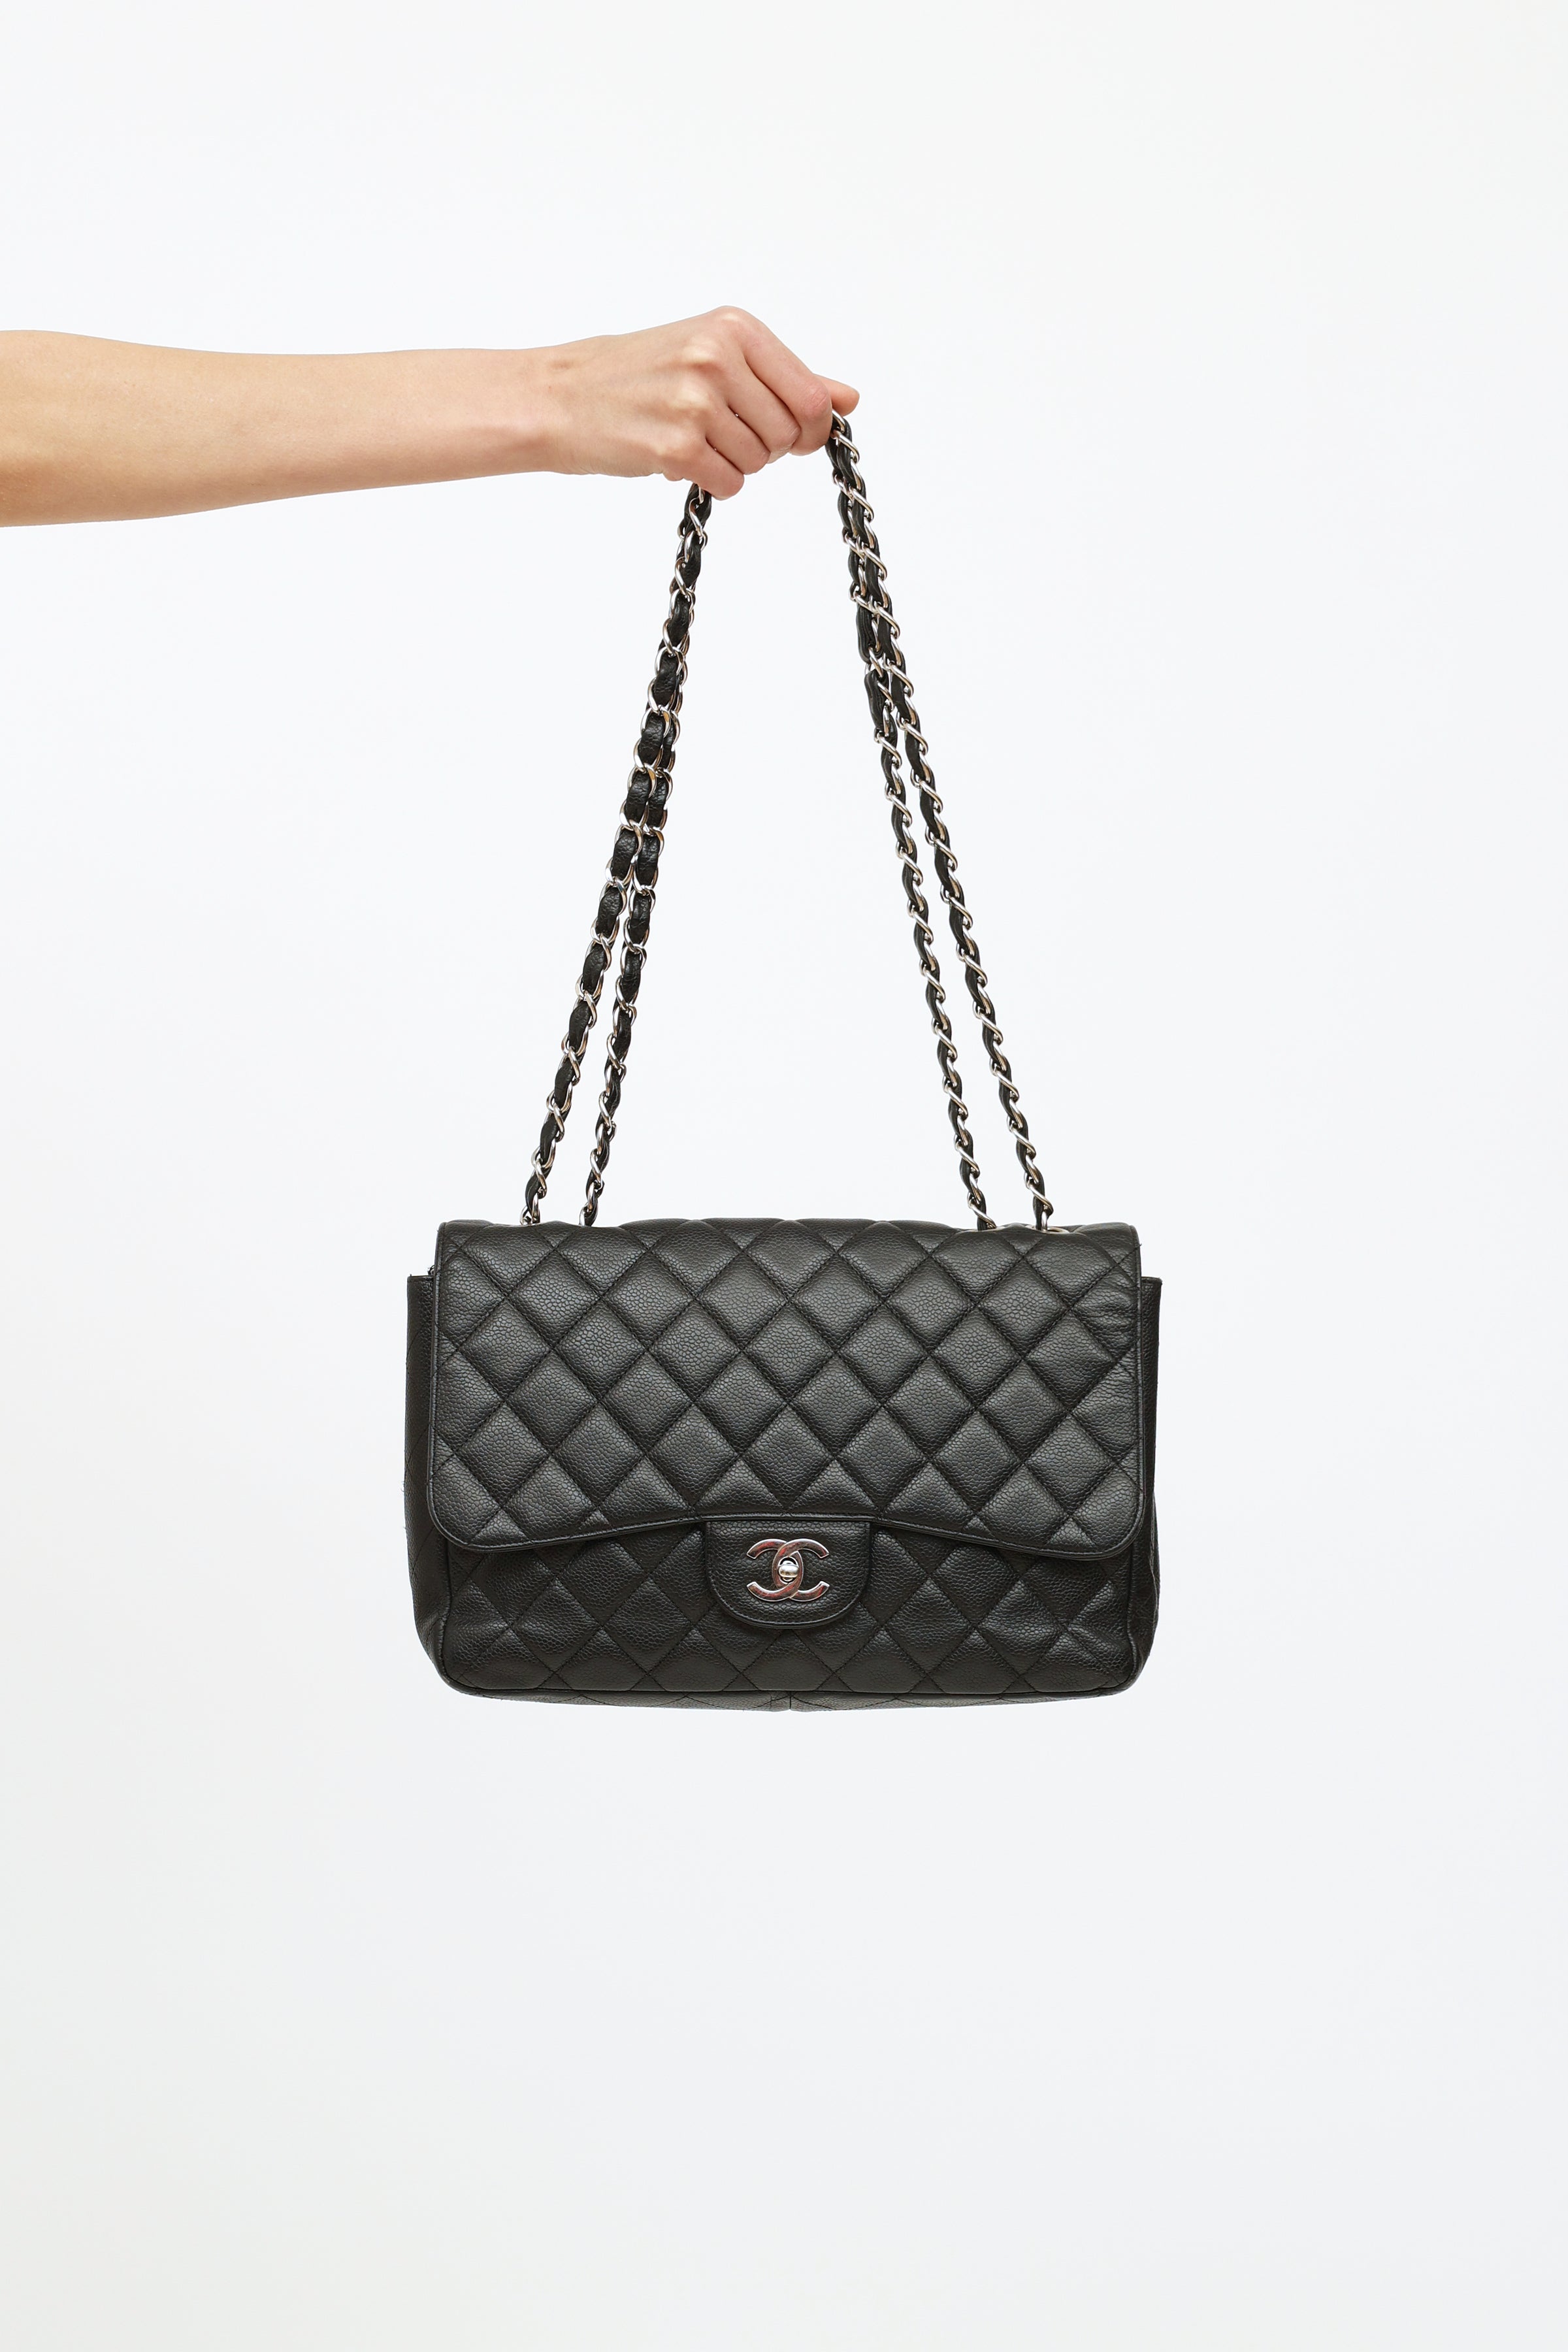 Chanel // Black Quilted Caviar Single Flap Jumbo Shoulder Bag